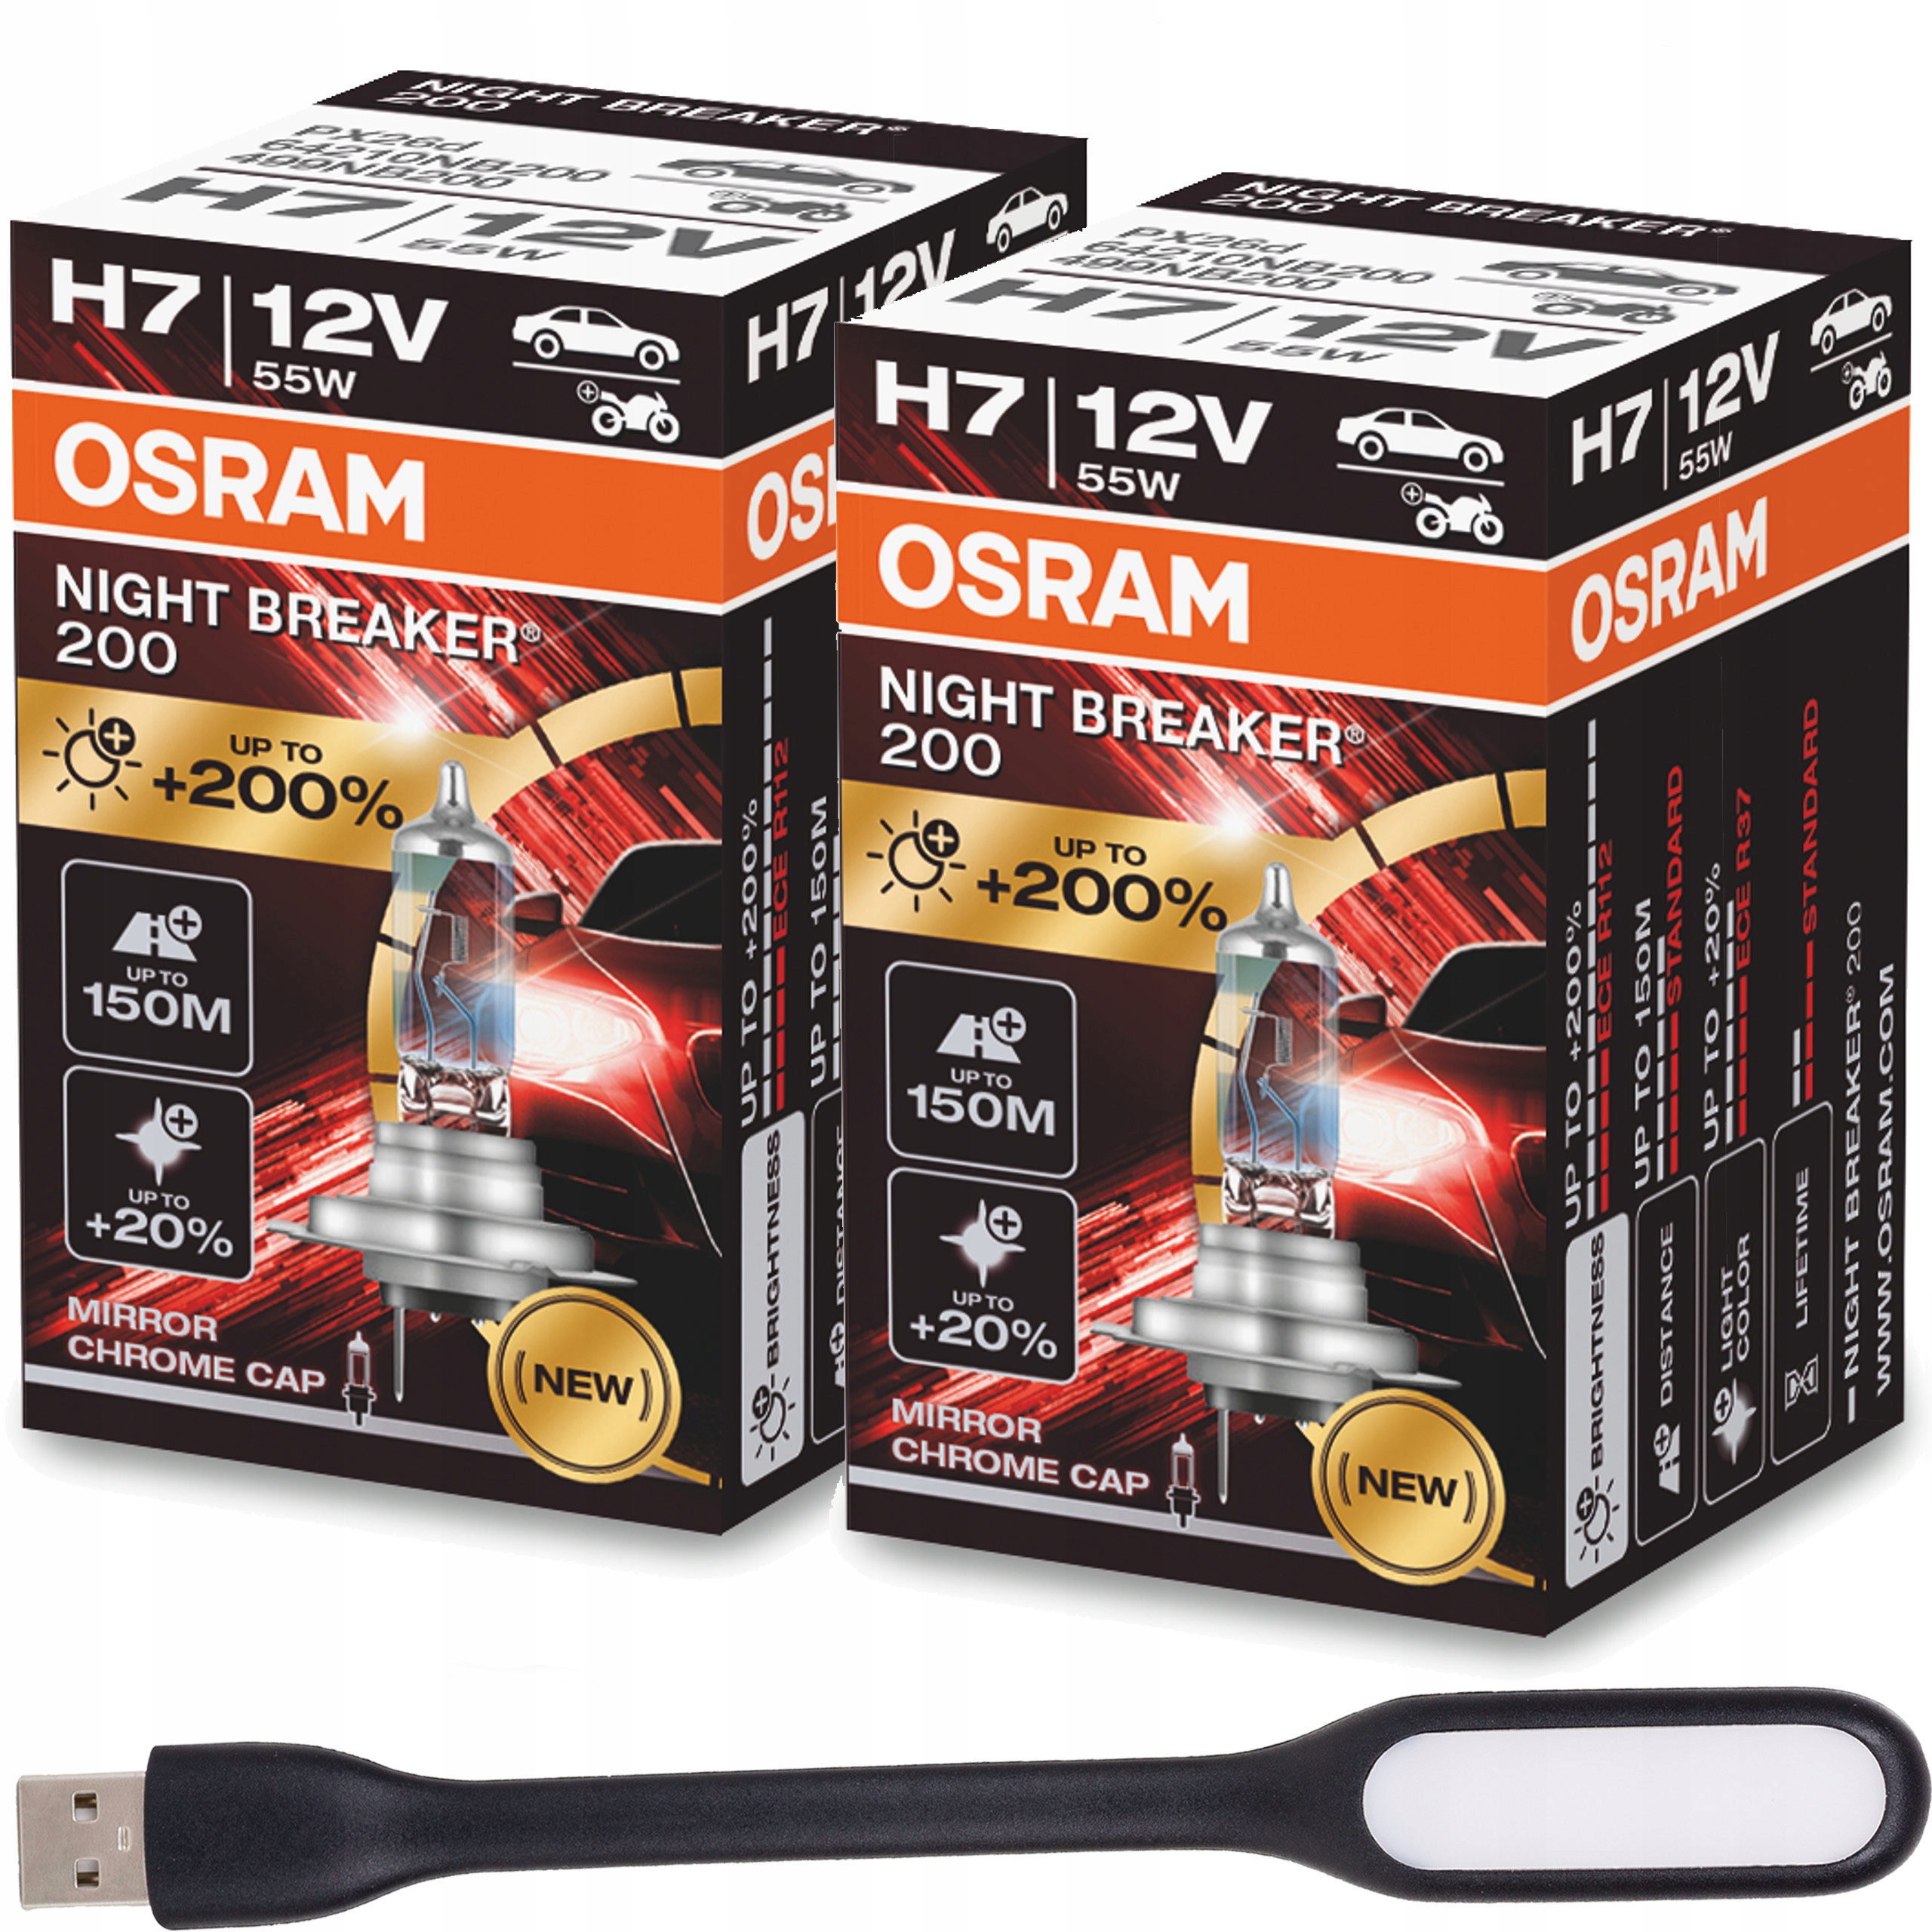 Osram H7 Night Breaker Laser +200% +150m + USB 64210NB200 za 119